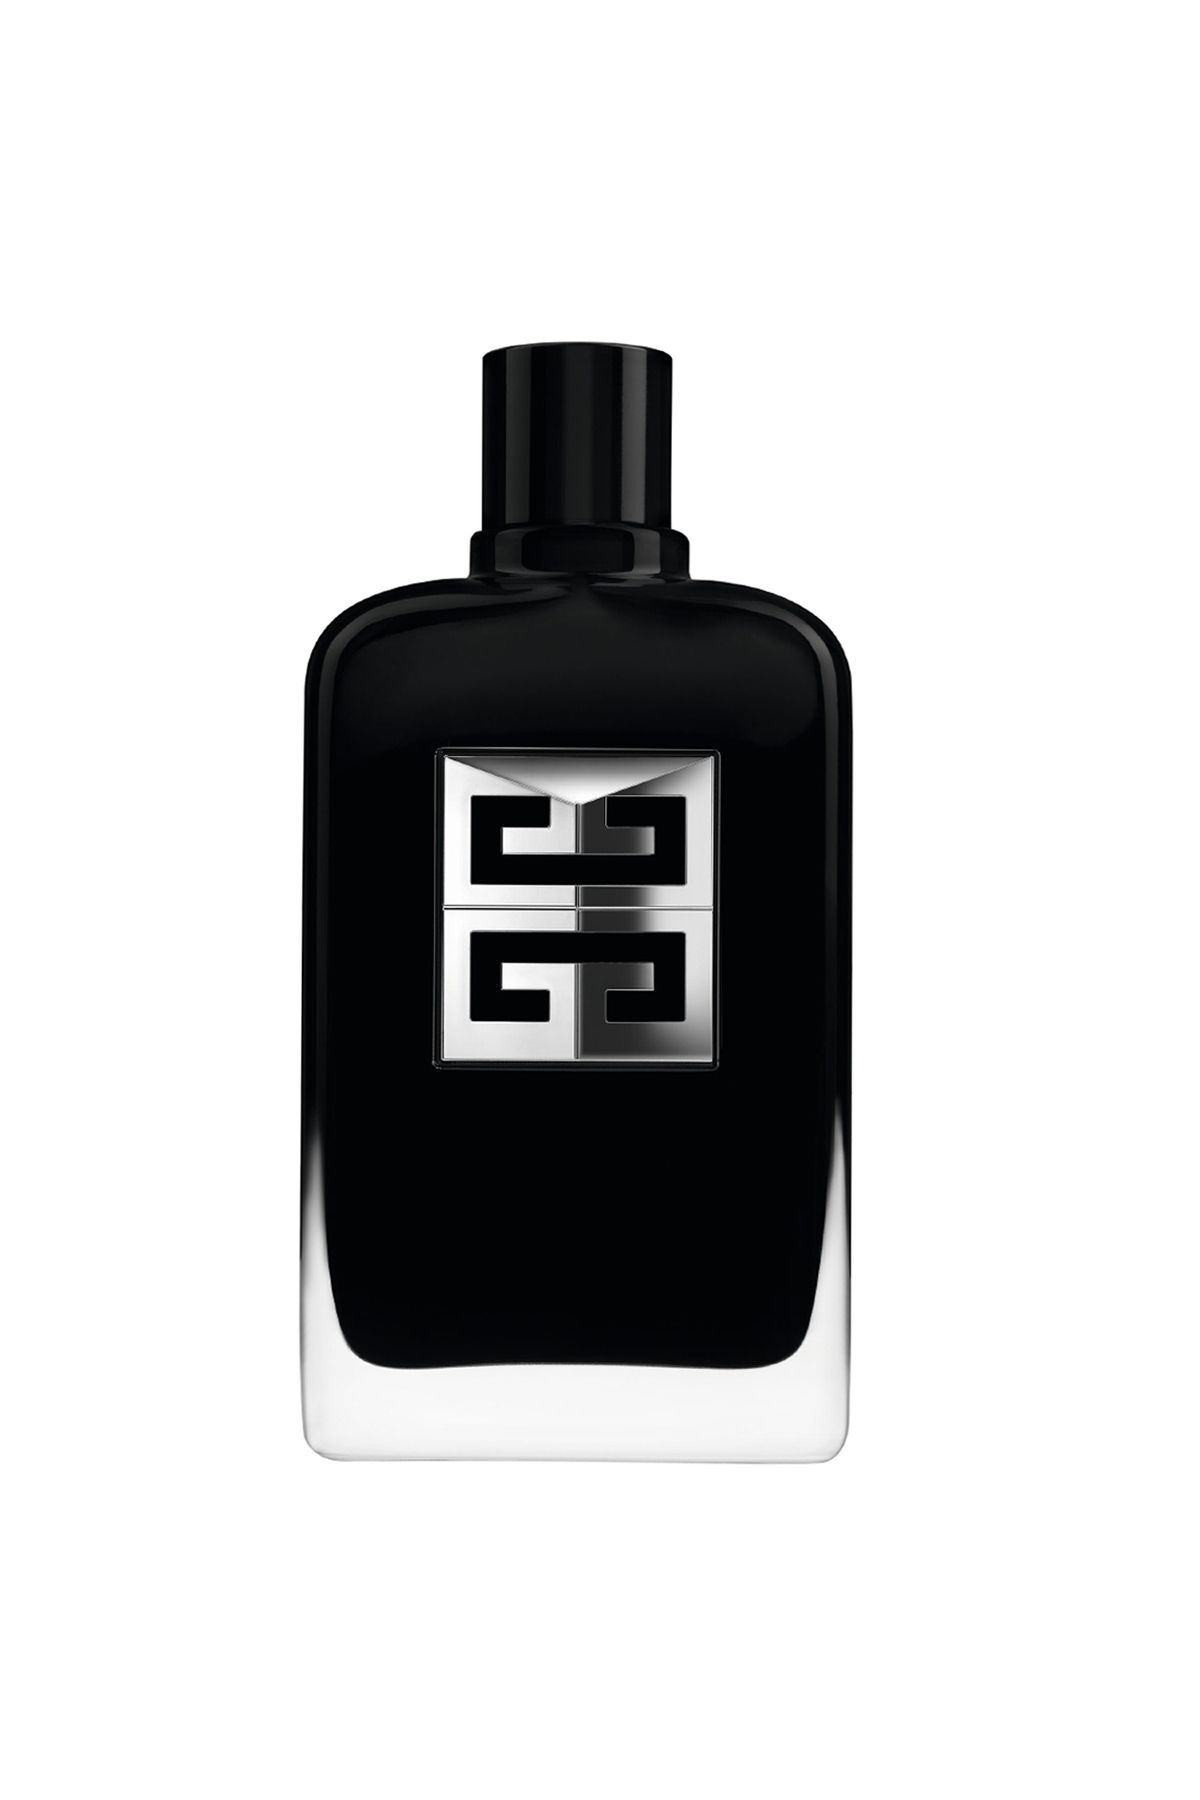 Givenchy Gentleman Socıety Edp Bıg Sıze Parfüm 200 ml